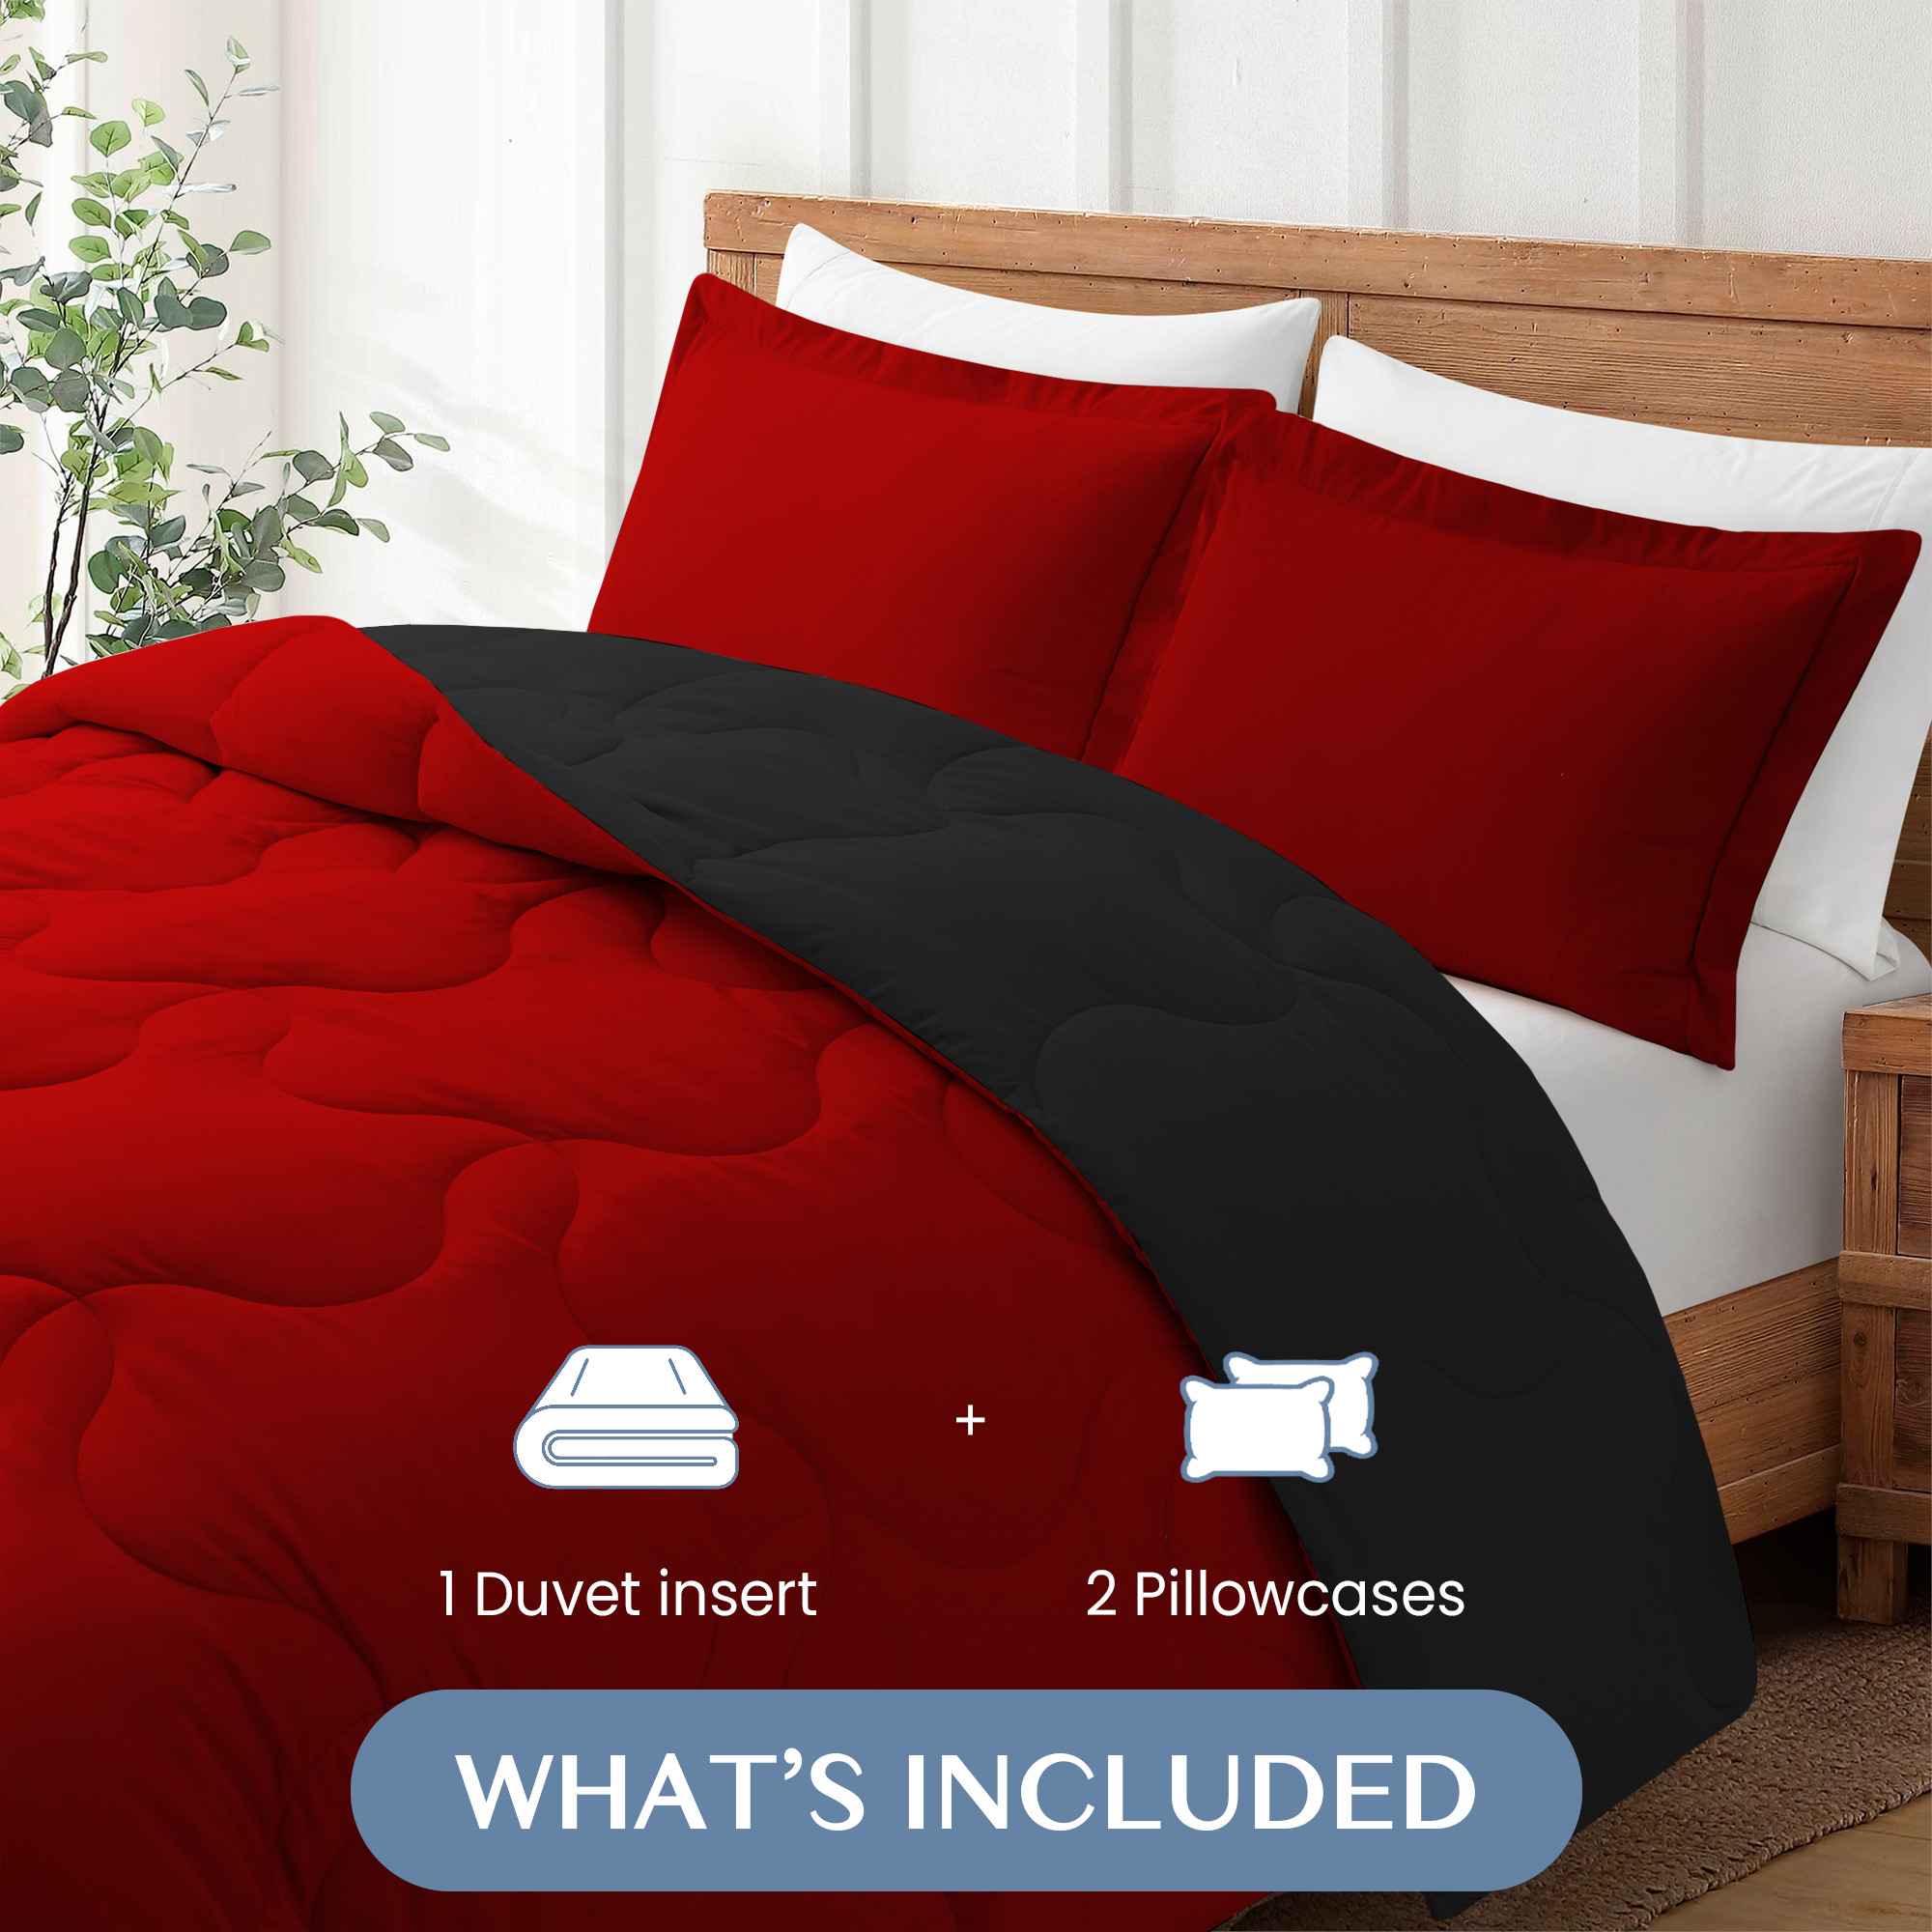 Reversible Superior Soft Comforter Sets, Down Alternative Comforter, Black&Red, Full Queen